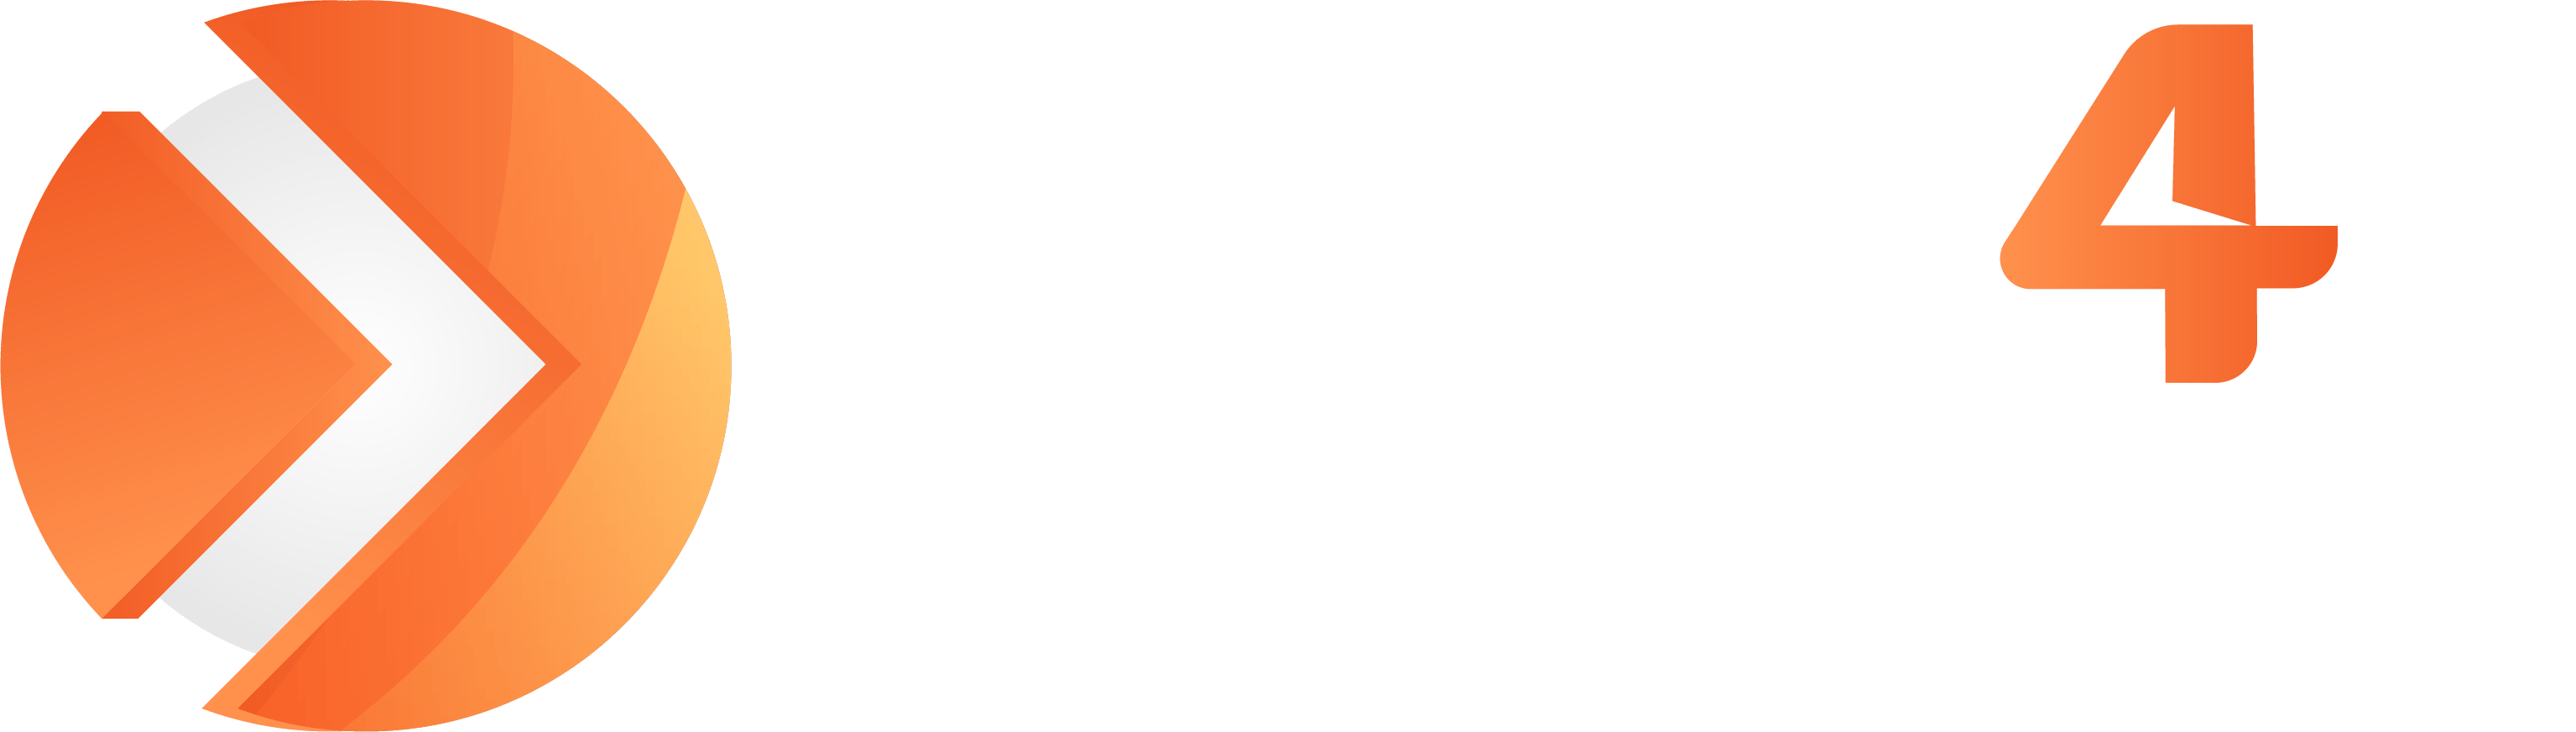 cross4solution